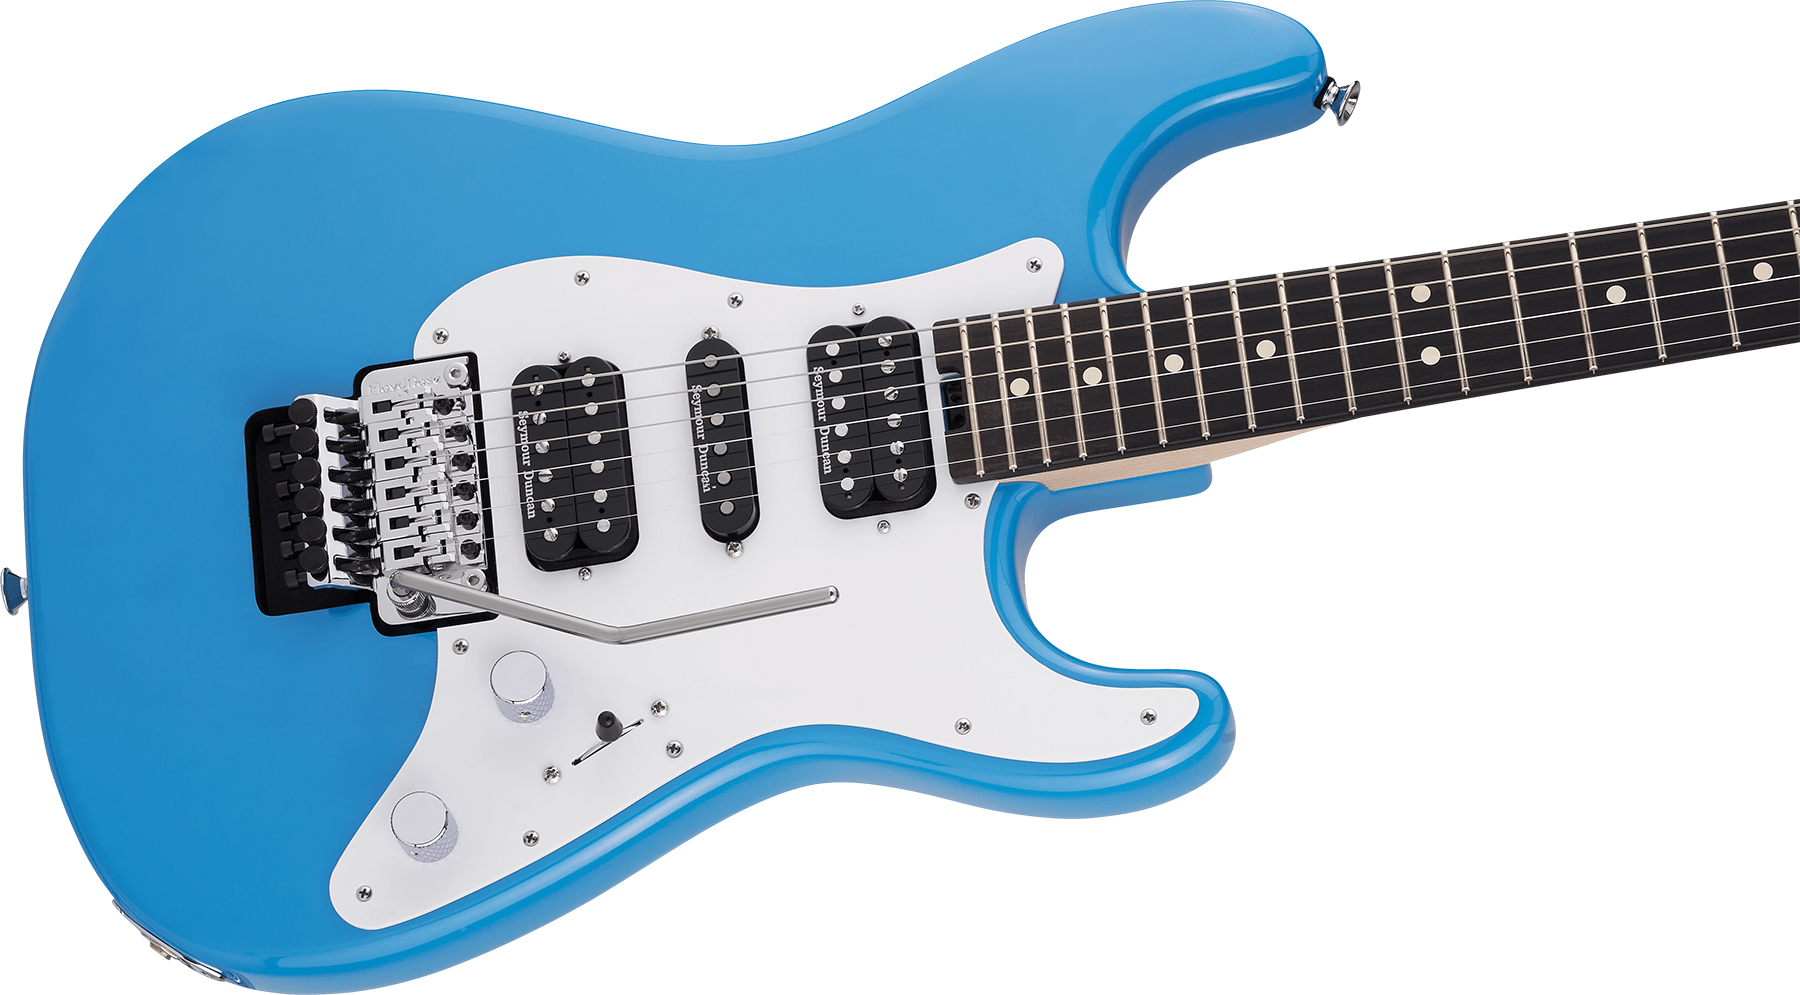 Charvel So-cal Style 1 Hsh Fr E Pro-mod Seymour Duncan Eb - Robbin's Egg Blue - Str shape electric guitar - Variation 2